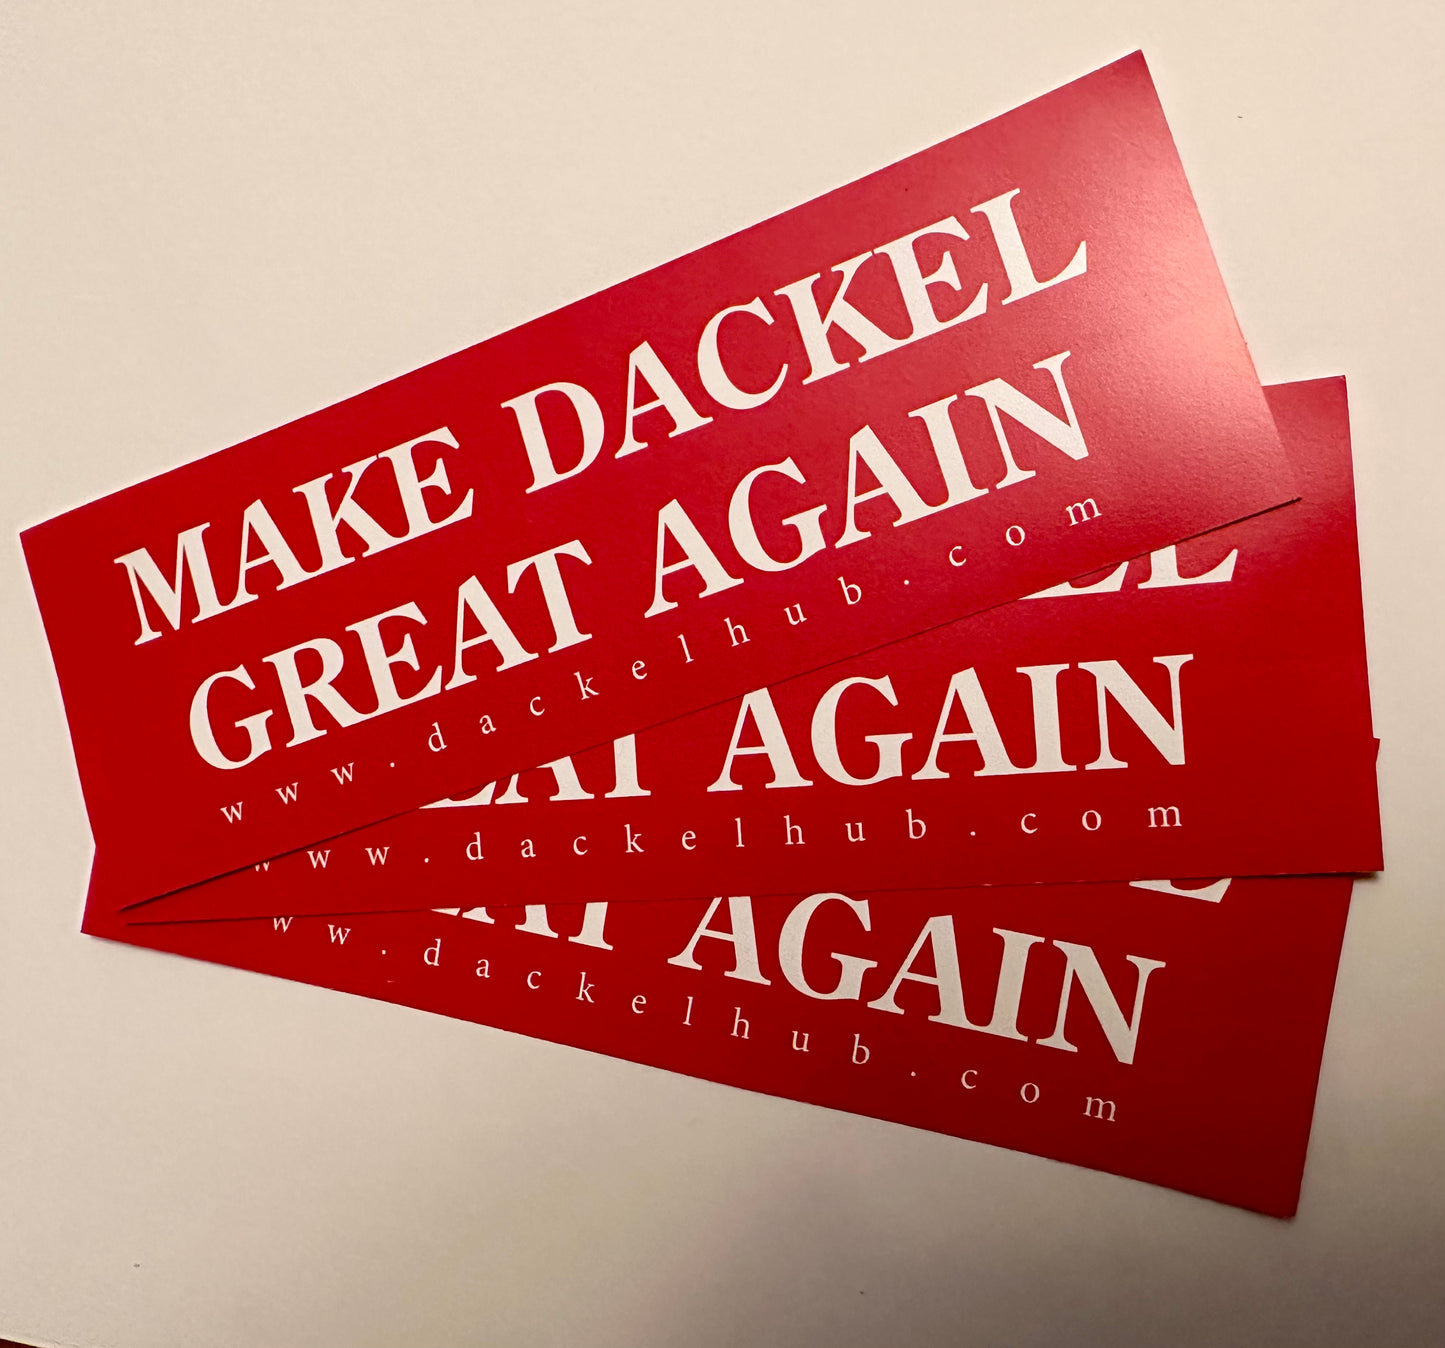 MAKE DACKEL GREAR AGAIN bumper Sticker